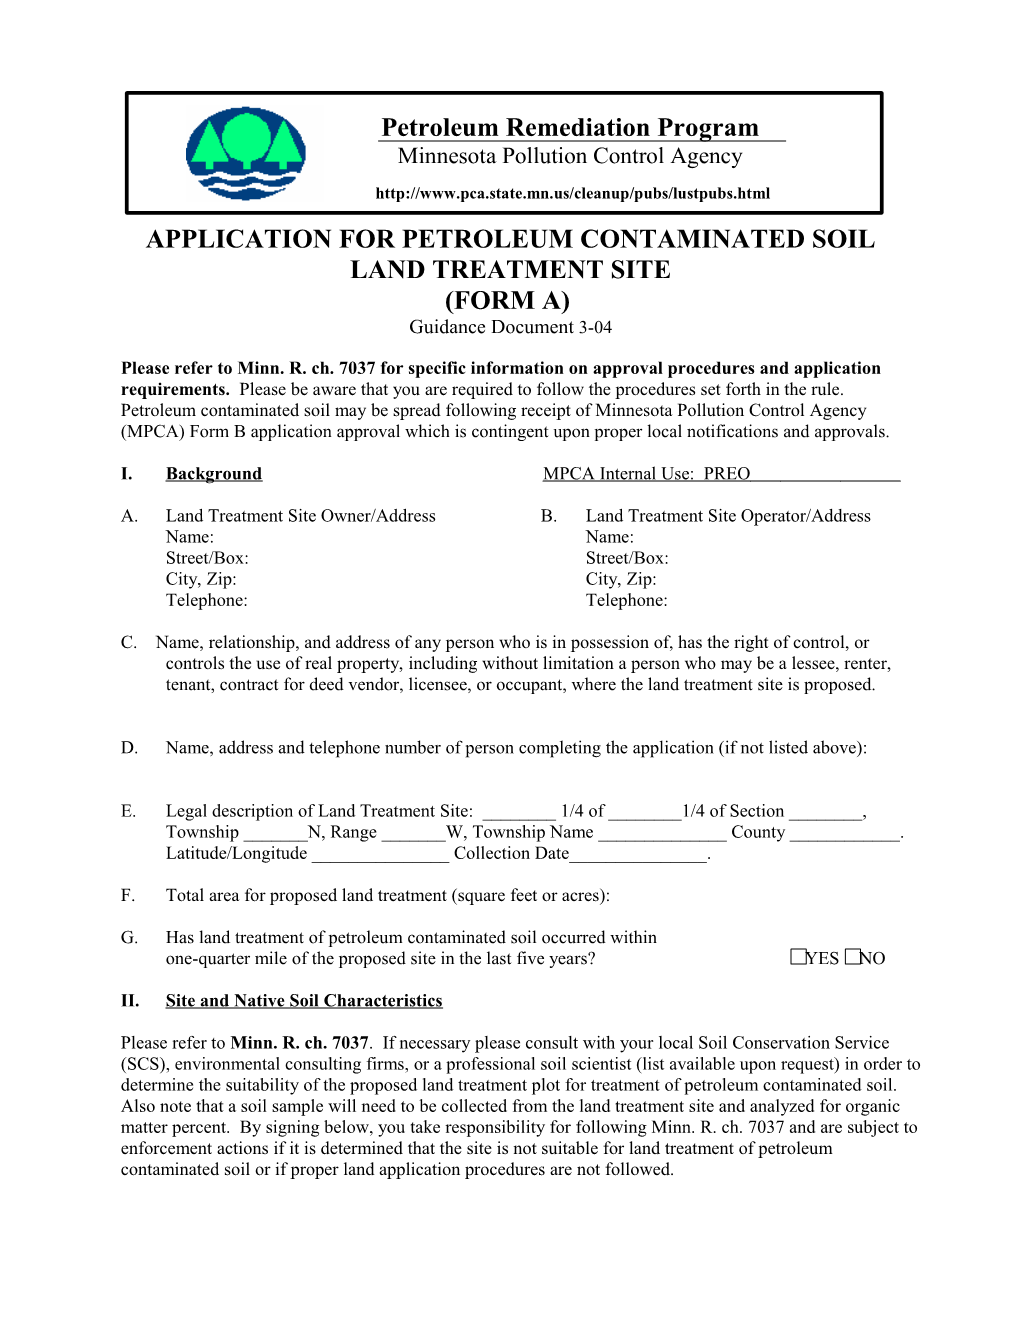 Application for a Petroleum Contaminated Soil Land Treatment Site (Form A)